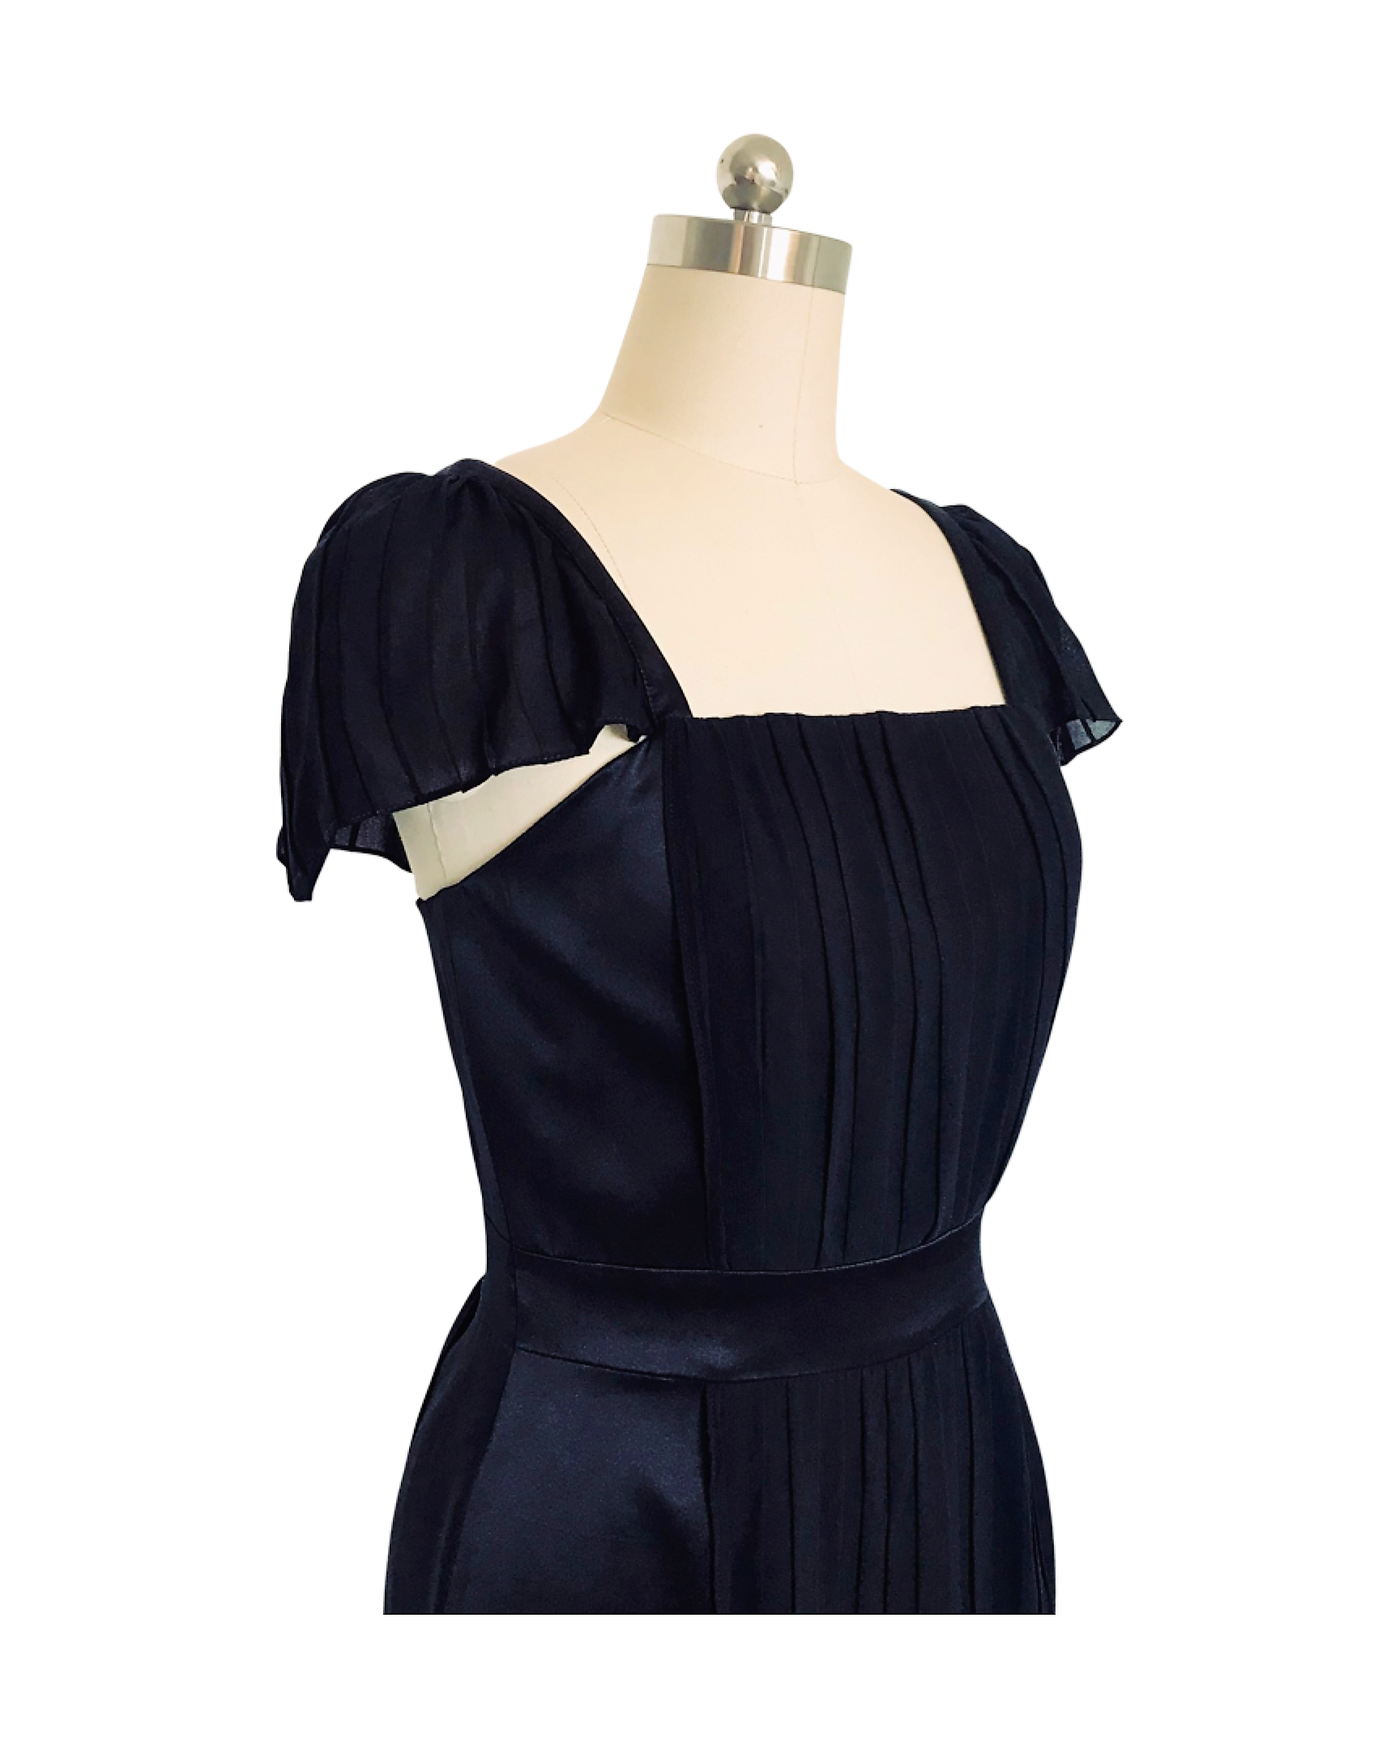 Black Pleated Cocktail Dress